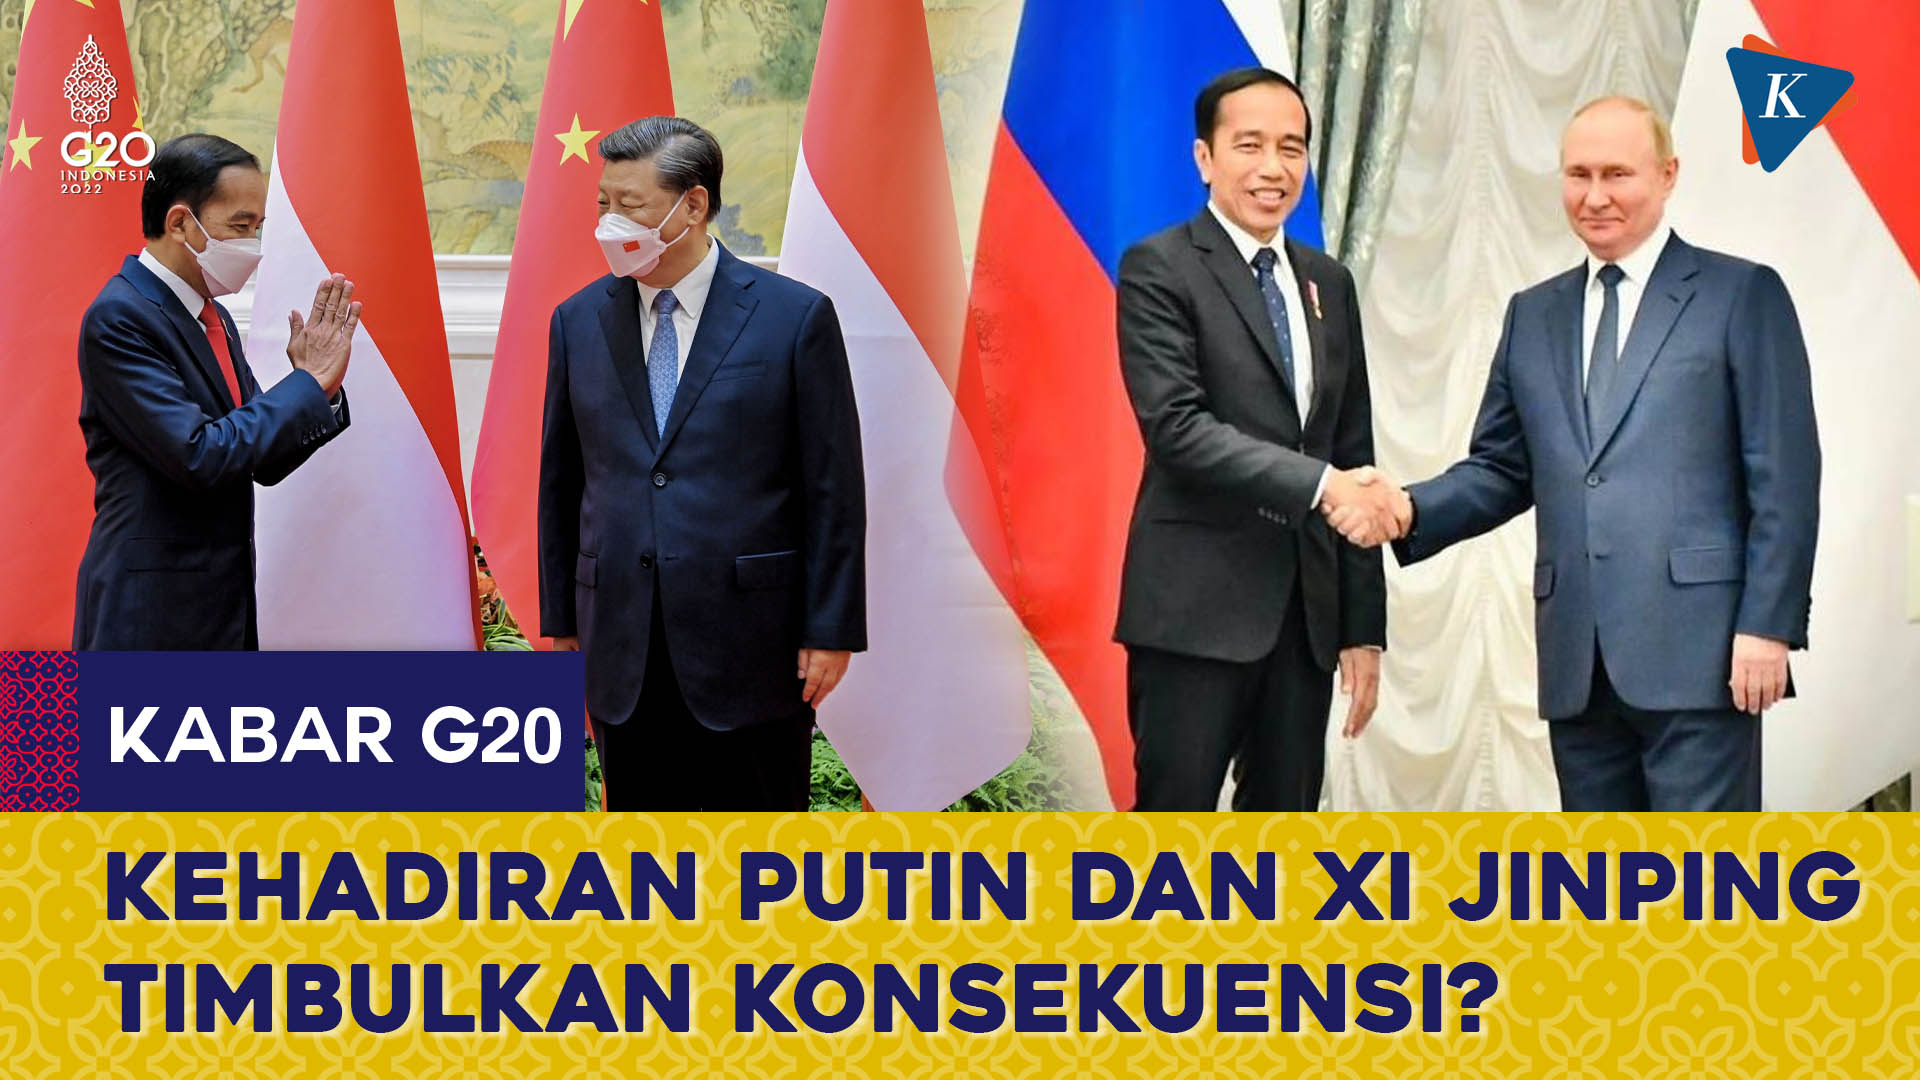 Putin-Xi Jinping Berpeluang Bertemu di KTT G20